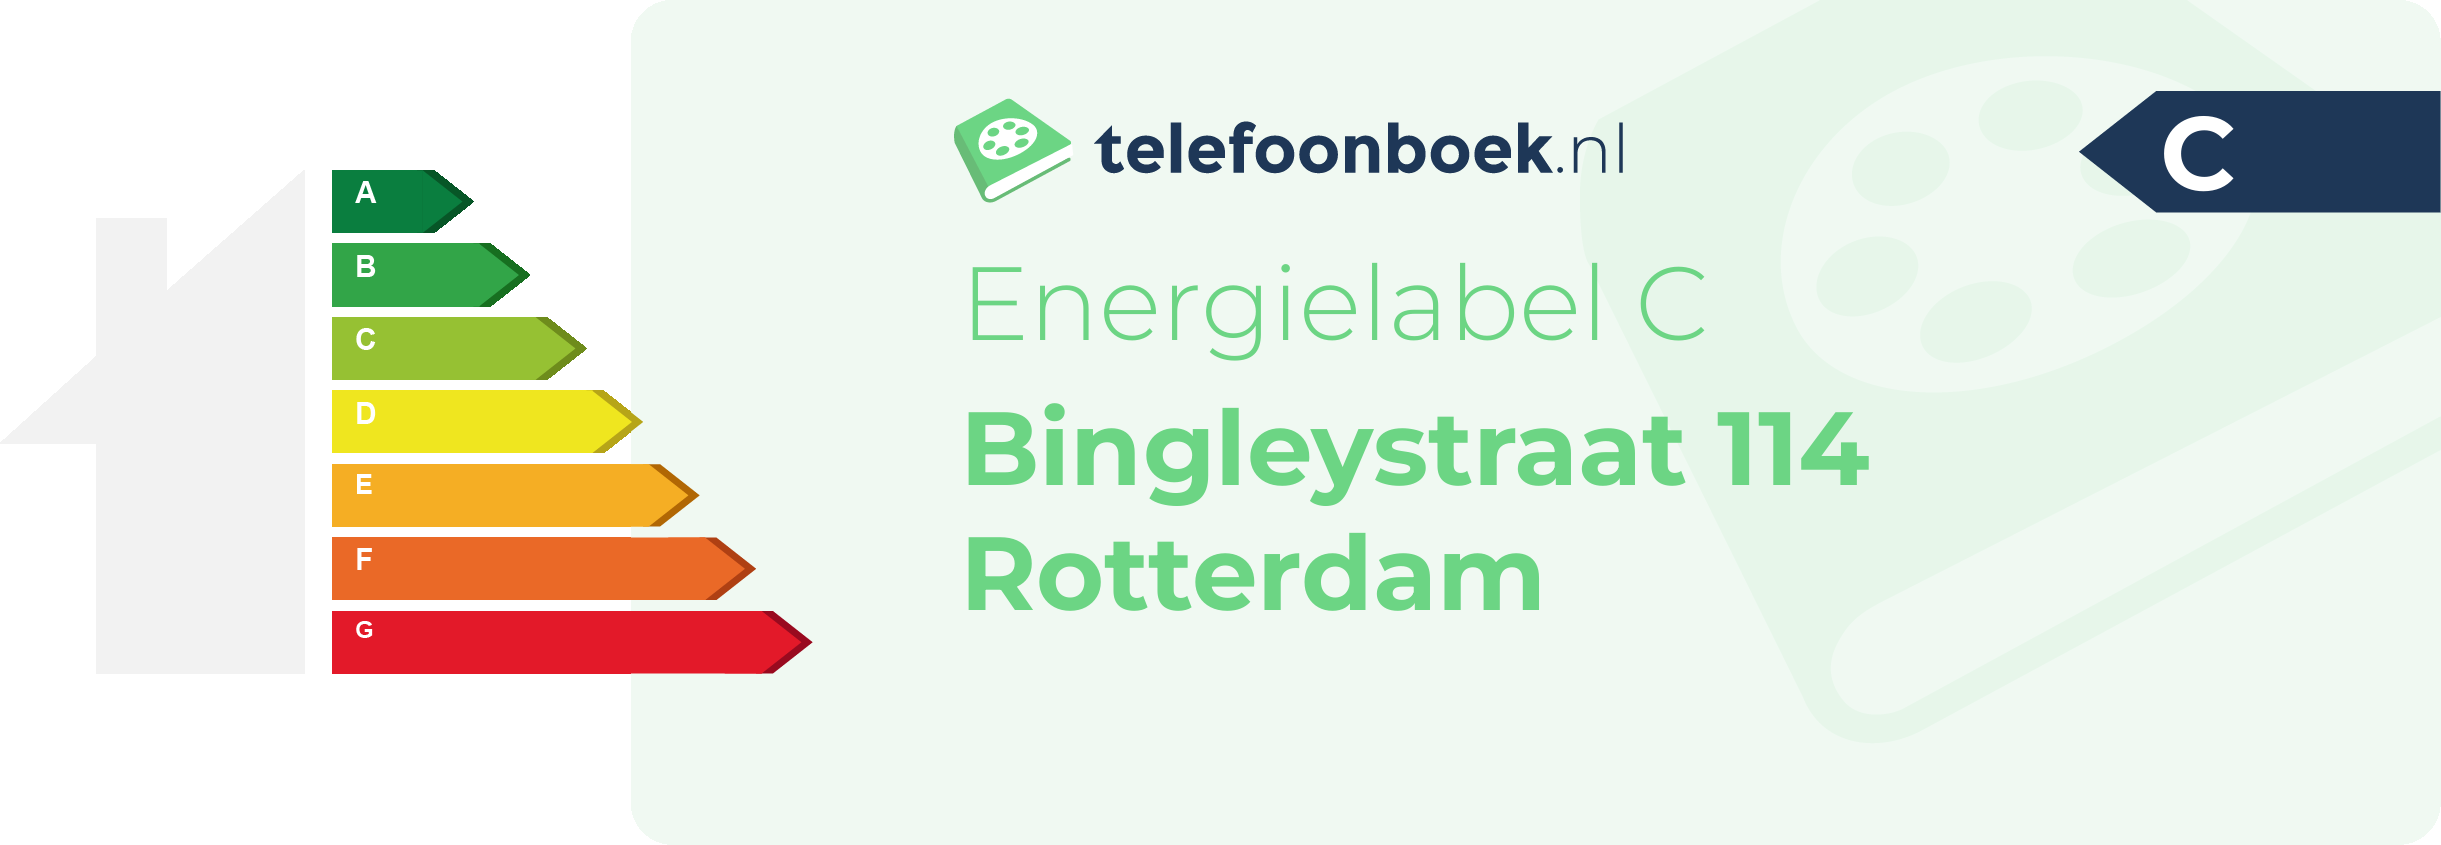 Energielabel Bingleystraat 114 Rotterdam